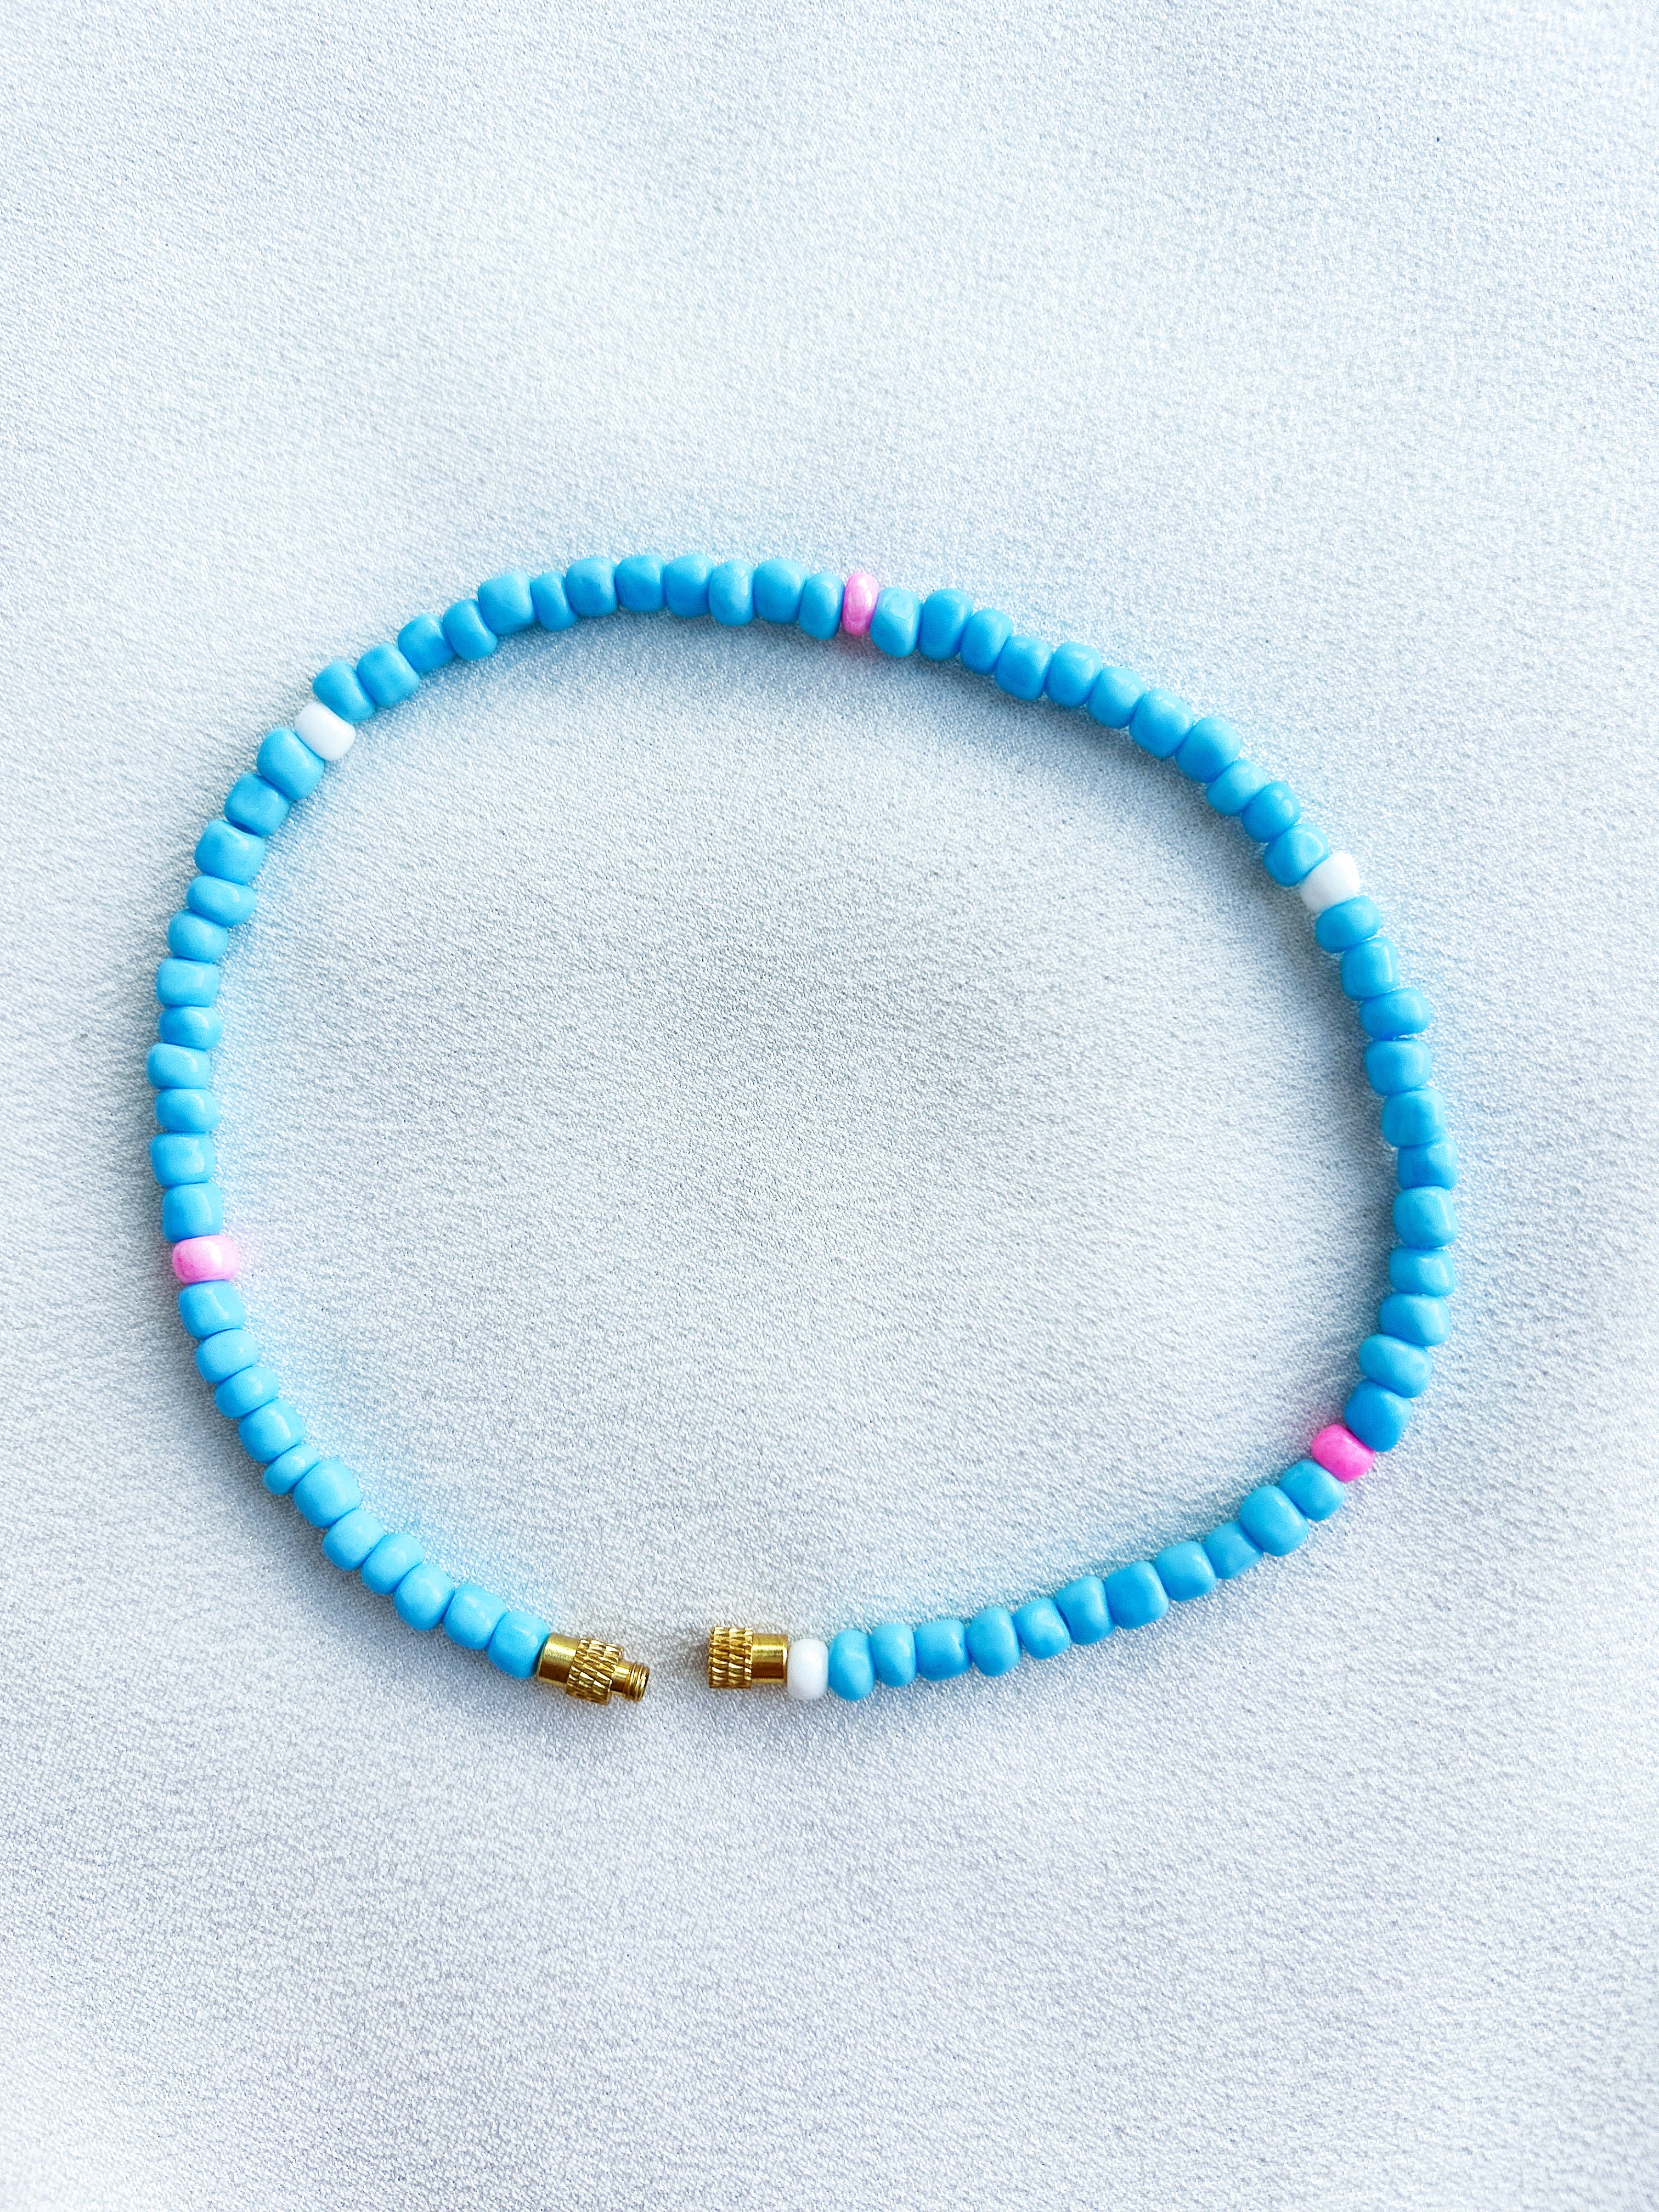 [THE ELEVEN] Anklet/Bracelet: Blue/Pink + White [Large Beads]